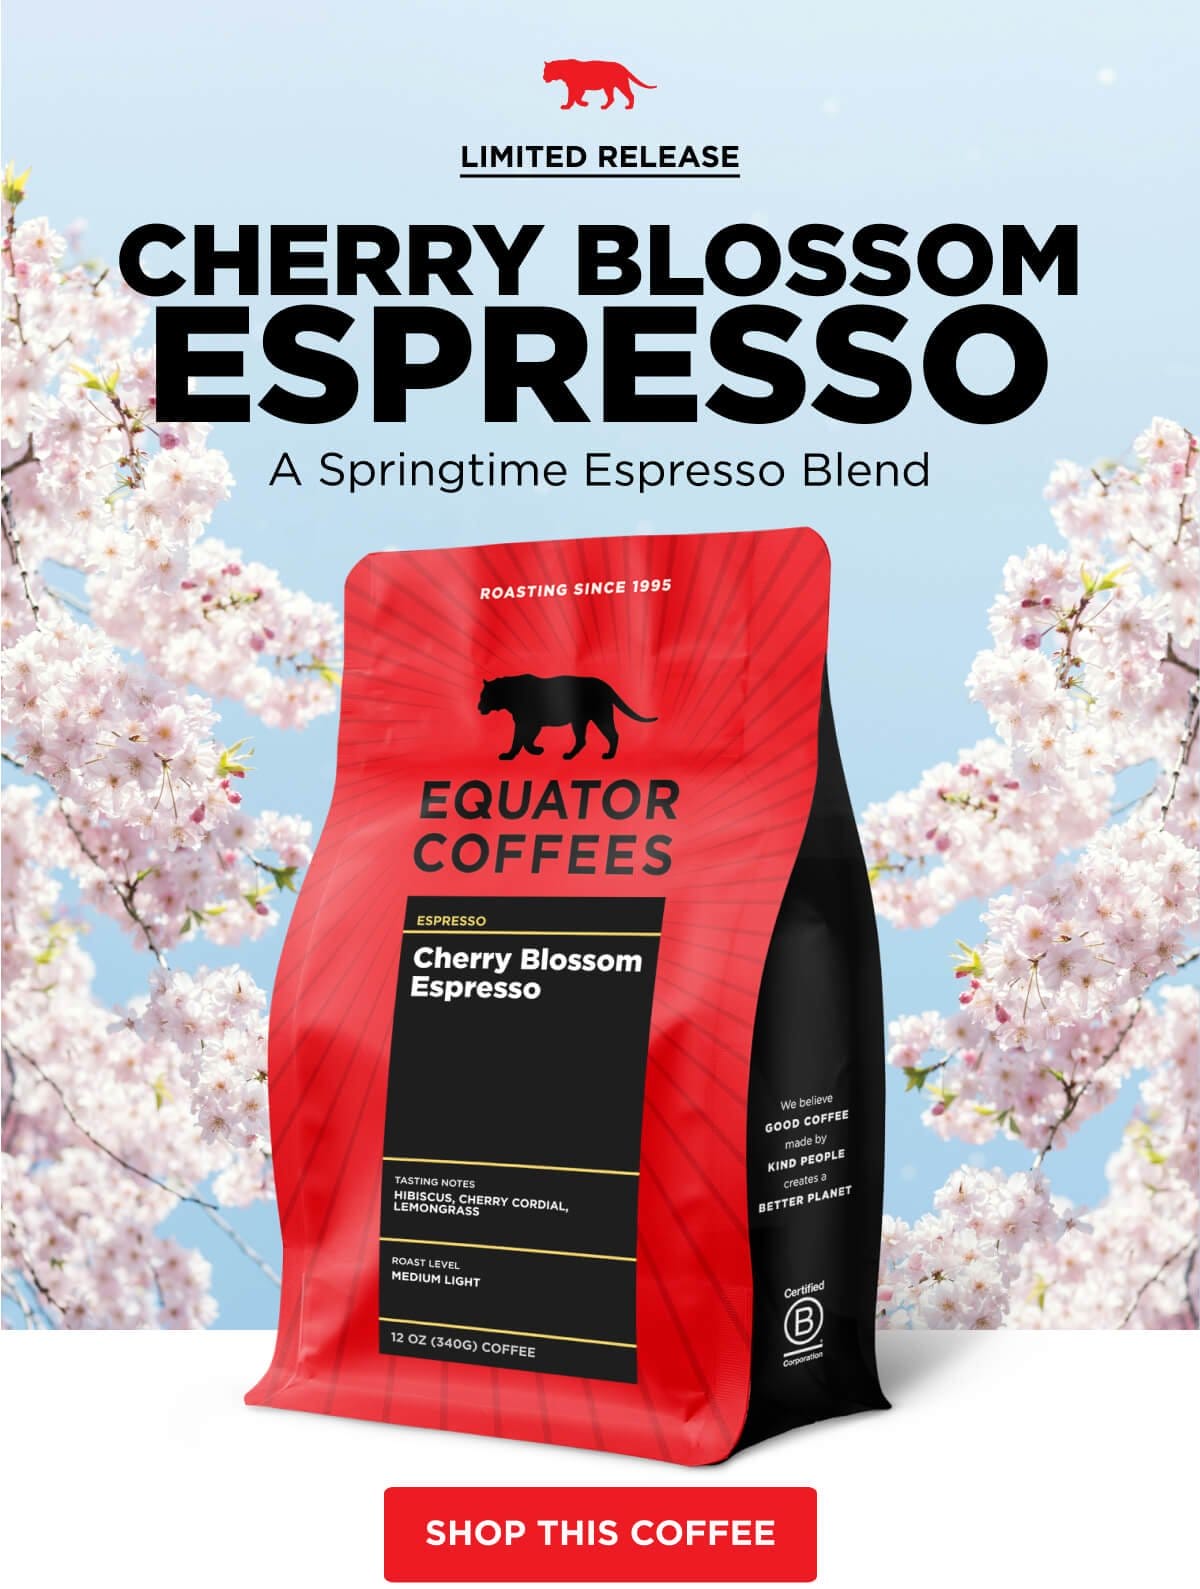 Limited Release: Cherry Blossom Espresso